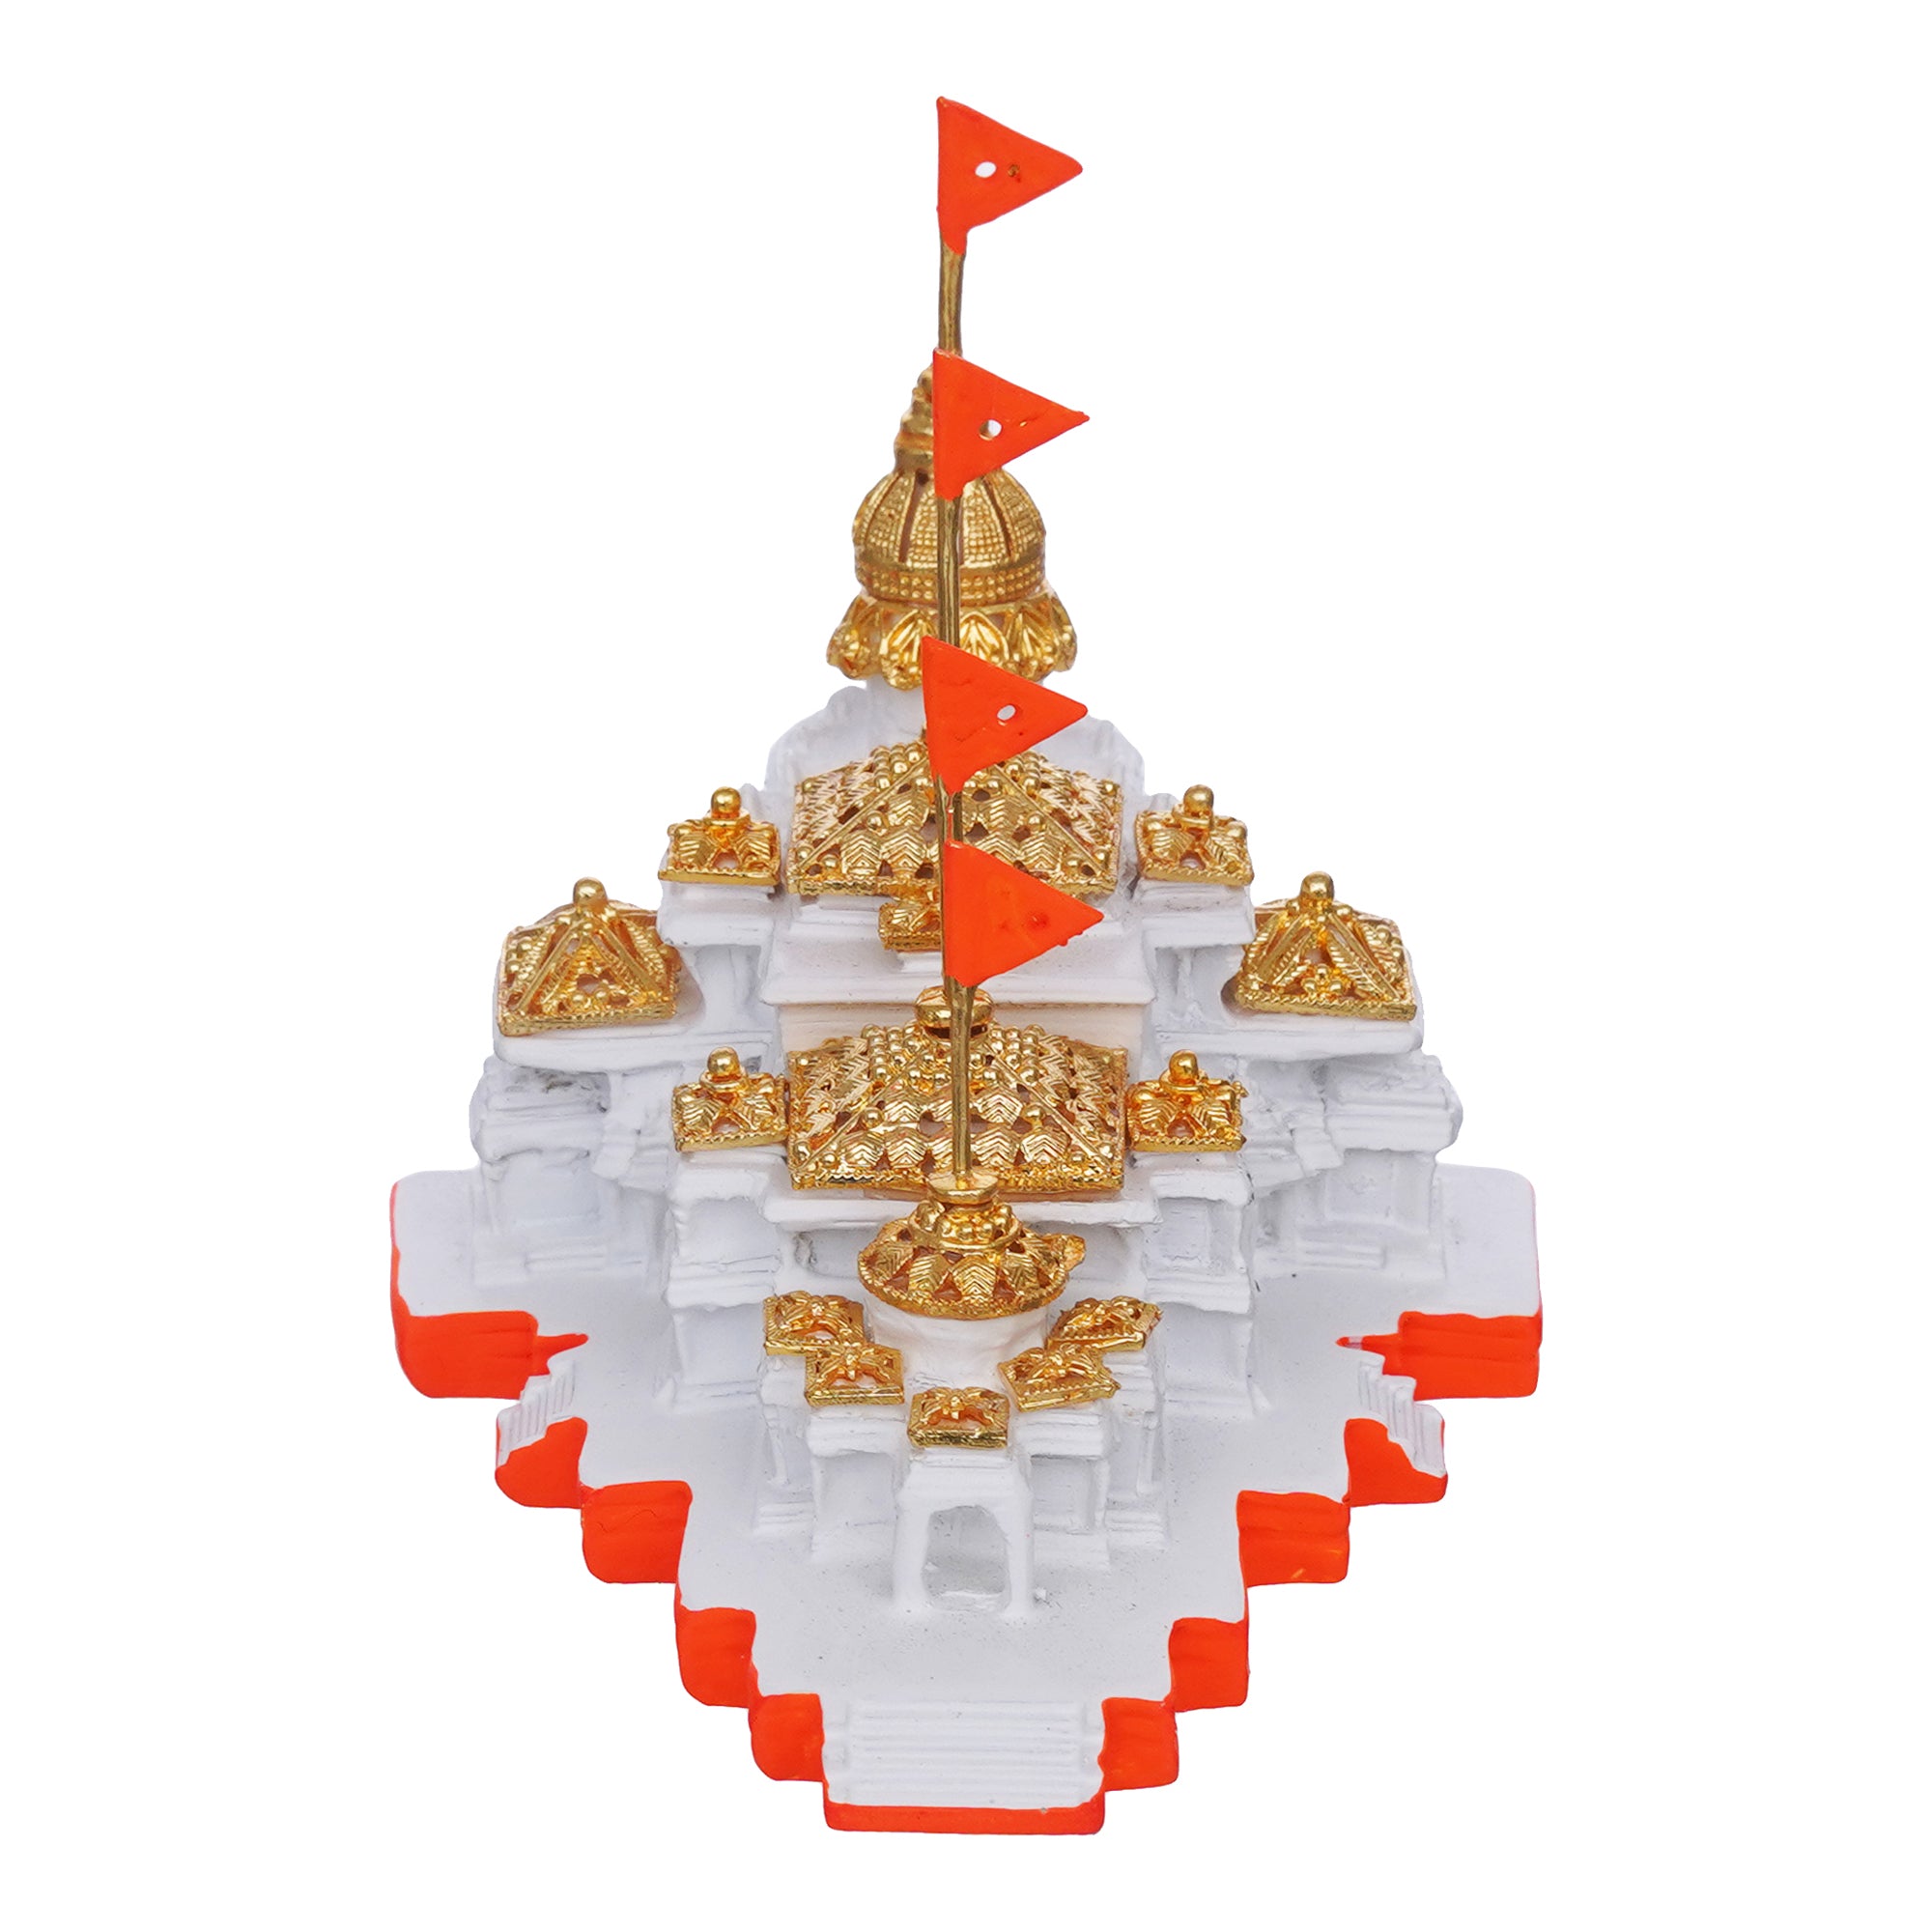 eCraftIndia Shri Ram Mandir Ayodhya Model Authentic Design - Perfect for Home Temple, Decor, and Spiritual Gifting (White, Gold, Orange) 7